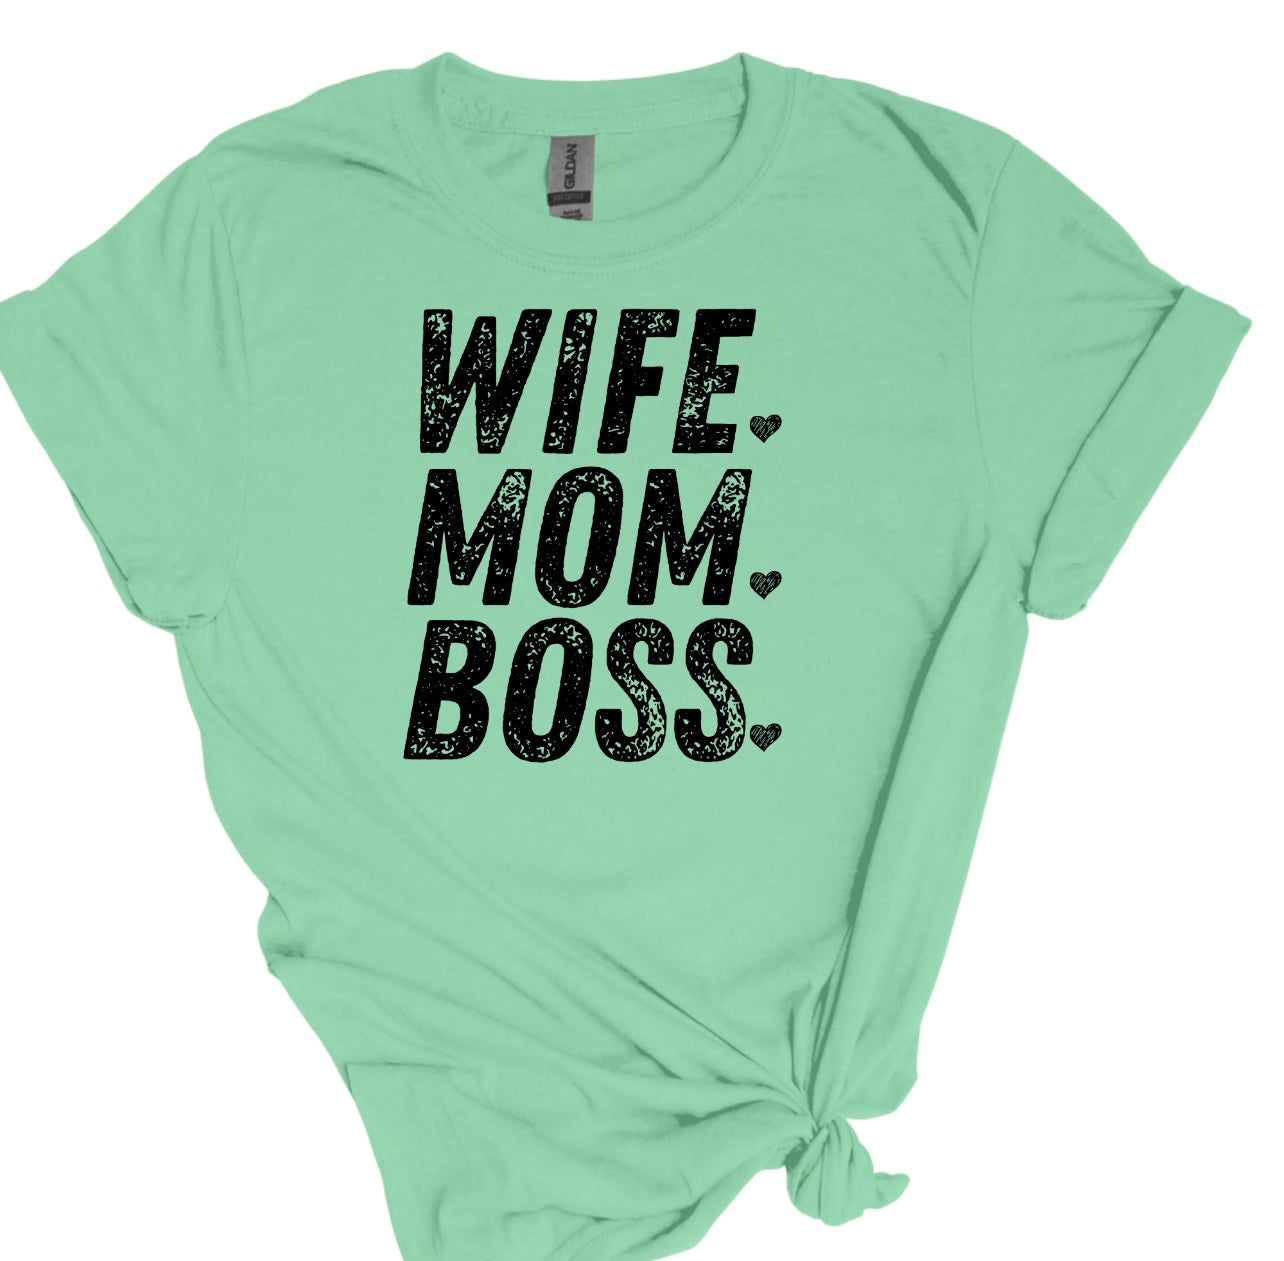 Wife mom boss print